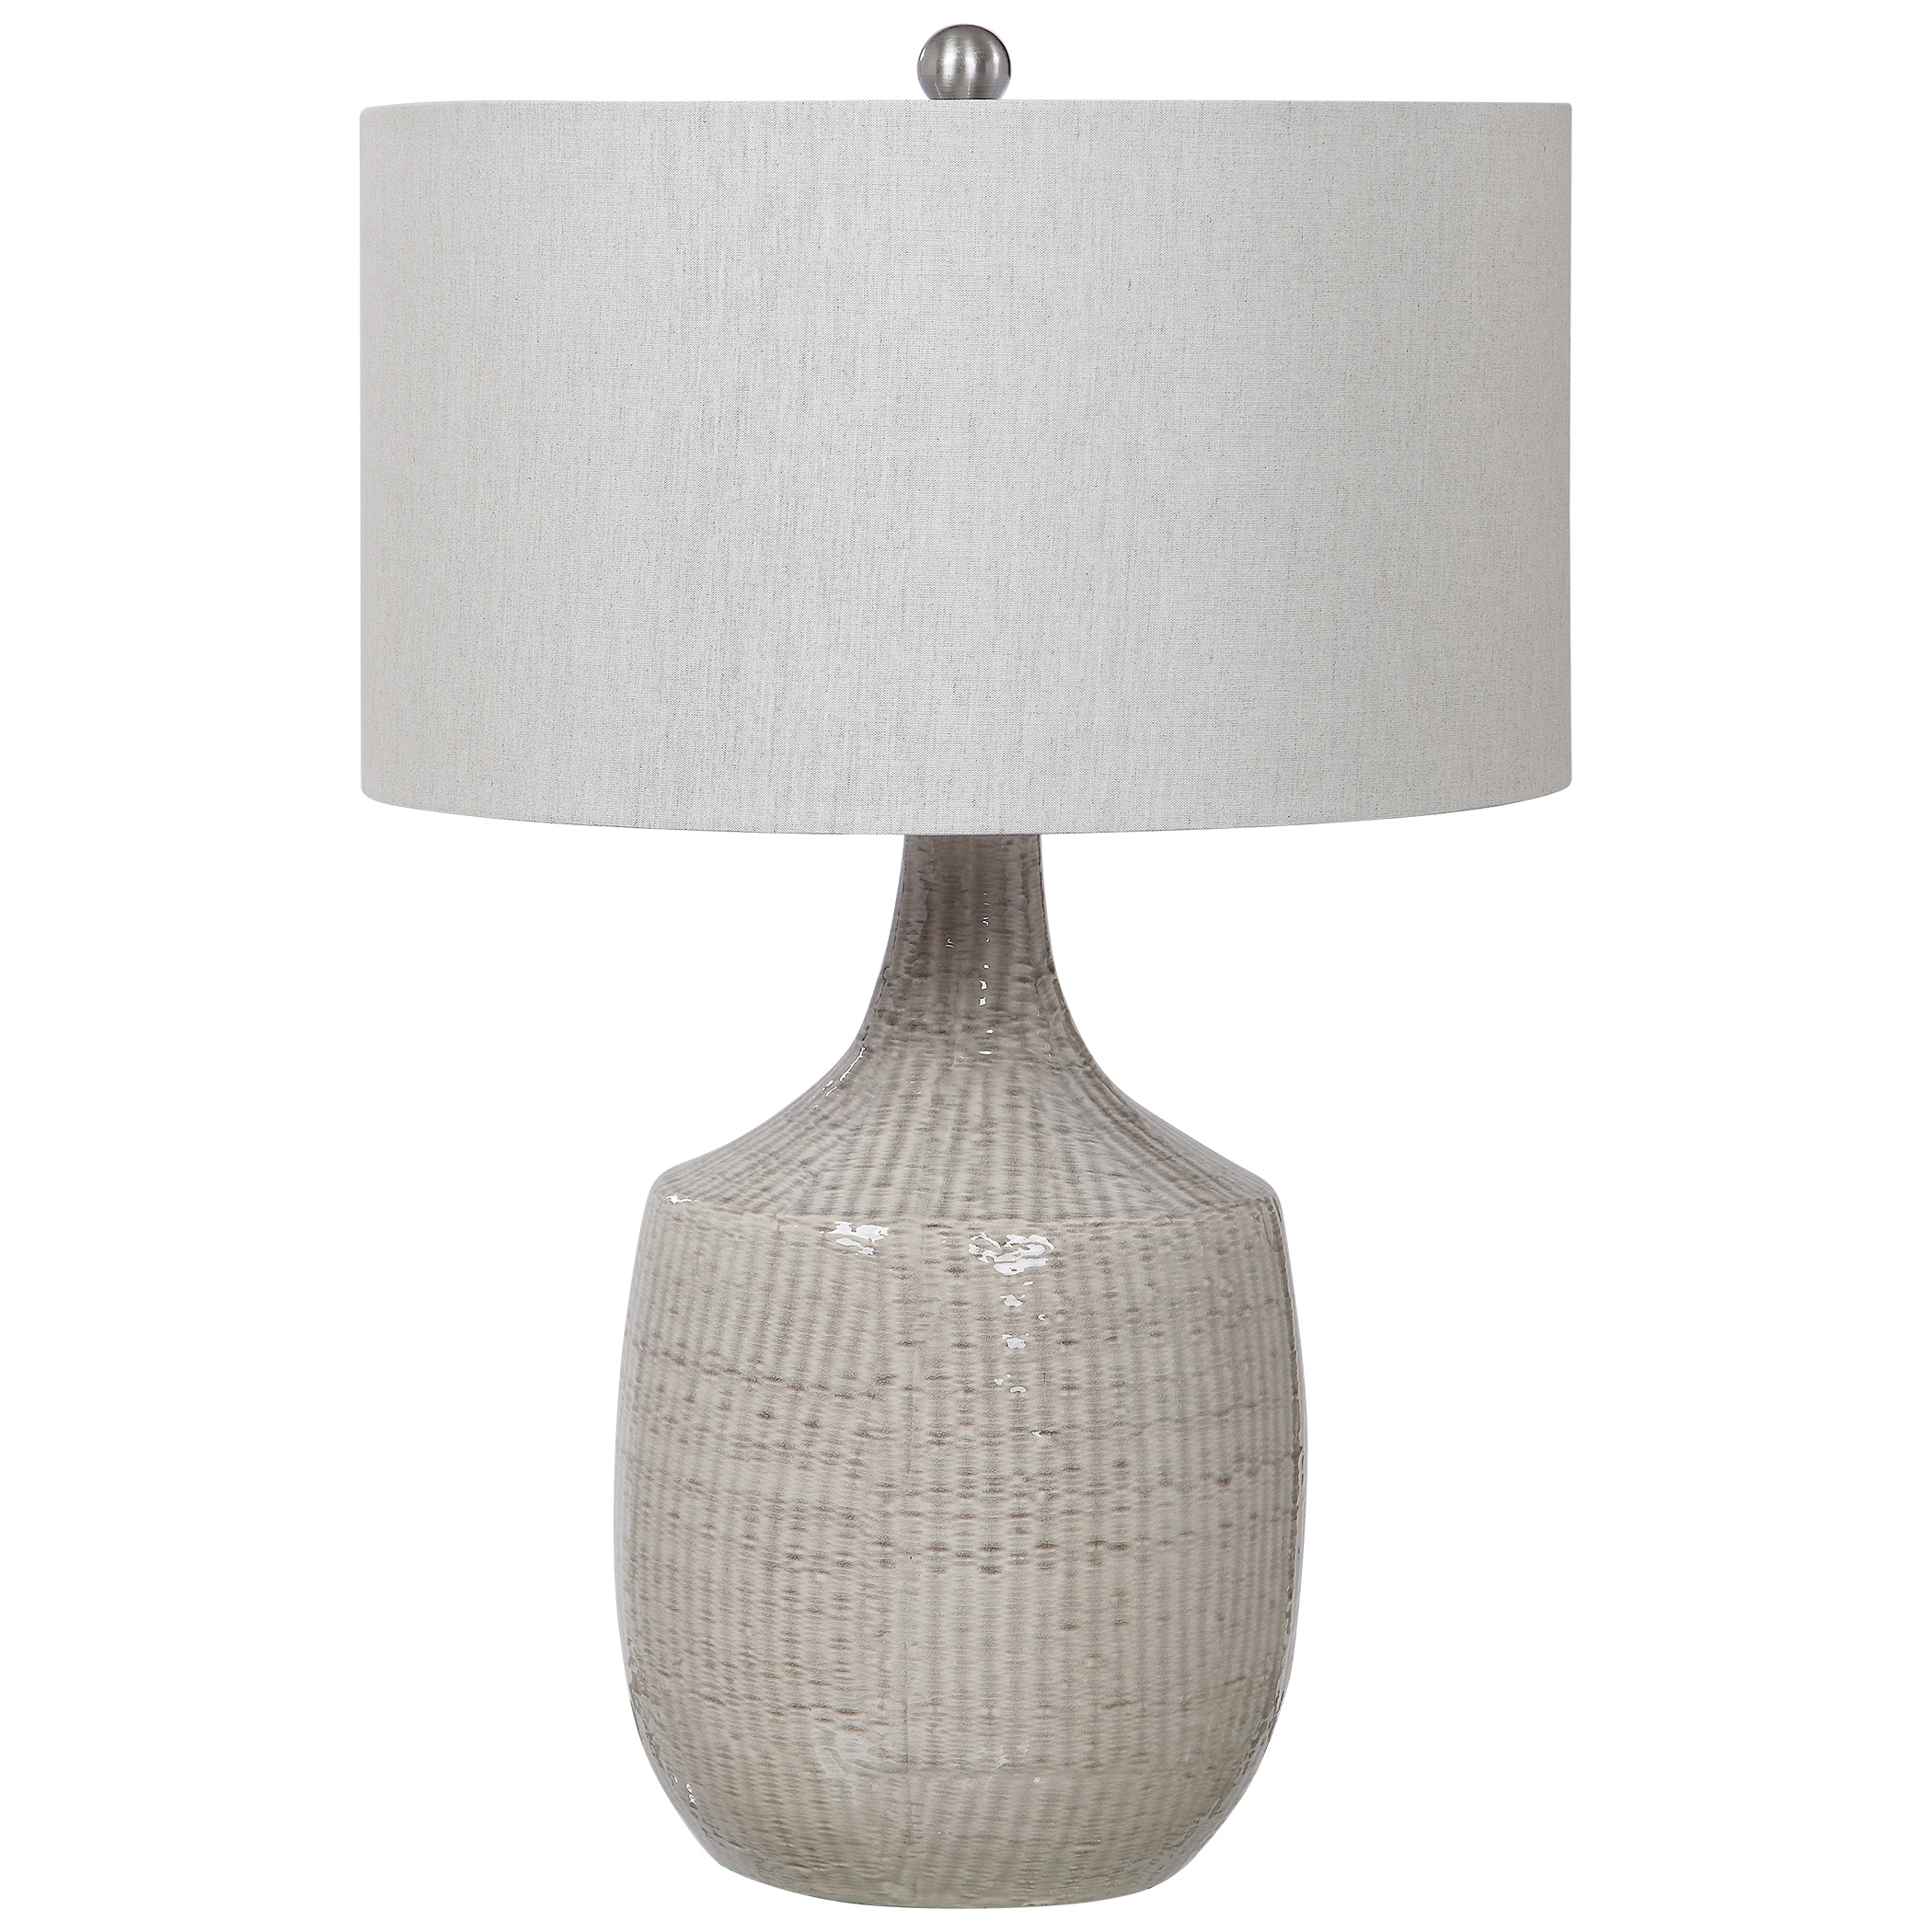 Felipe Gray Table Lamp - Image 6